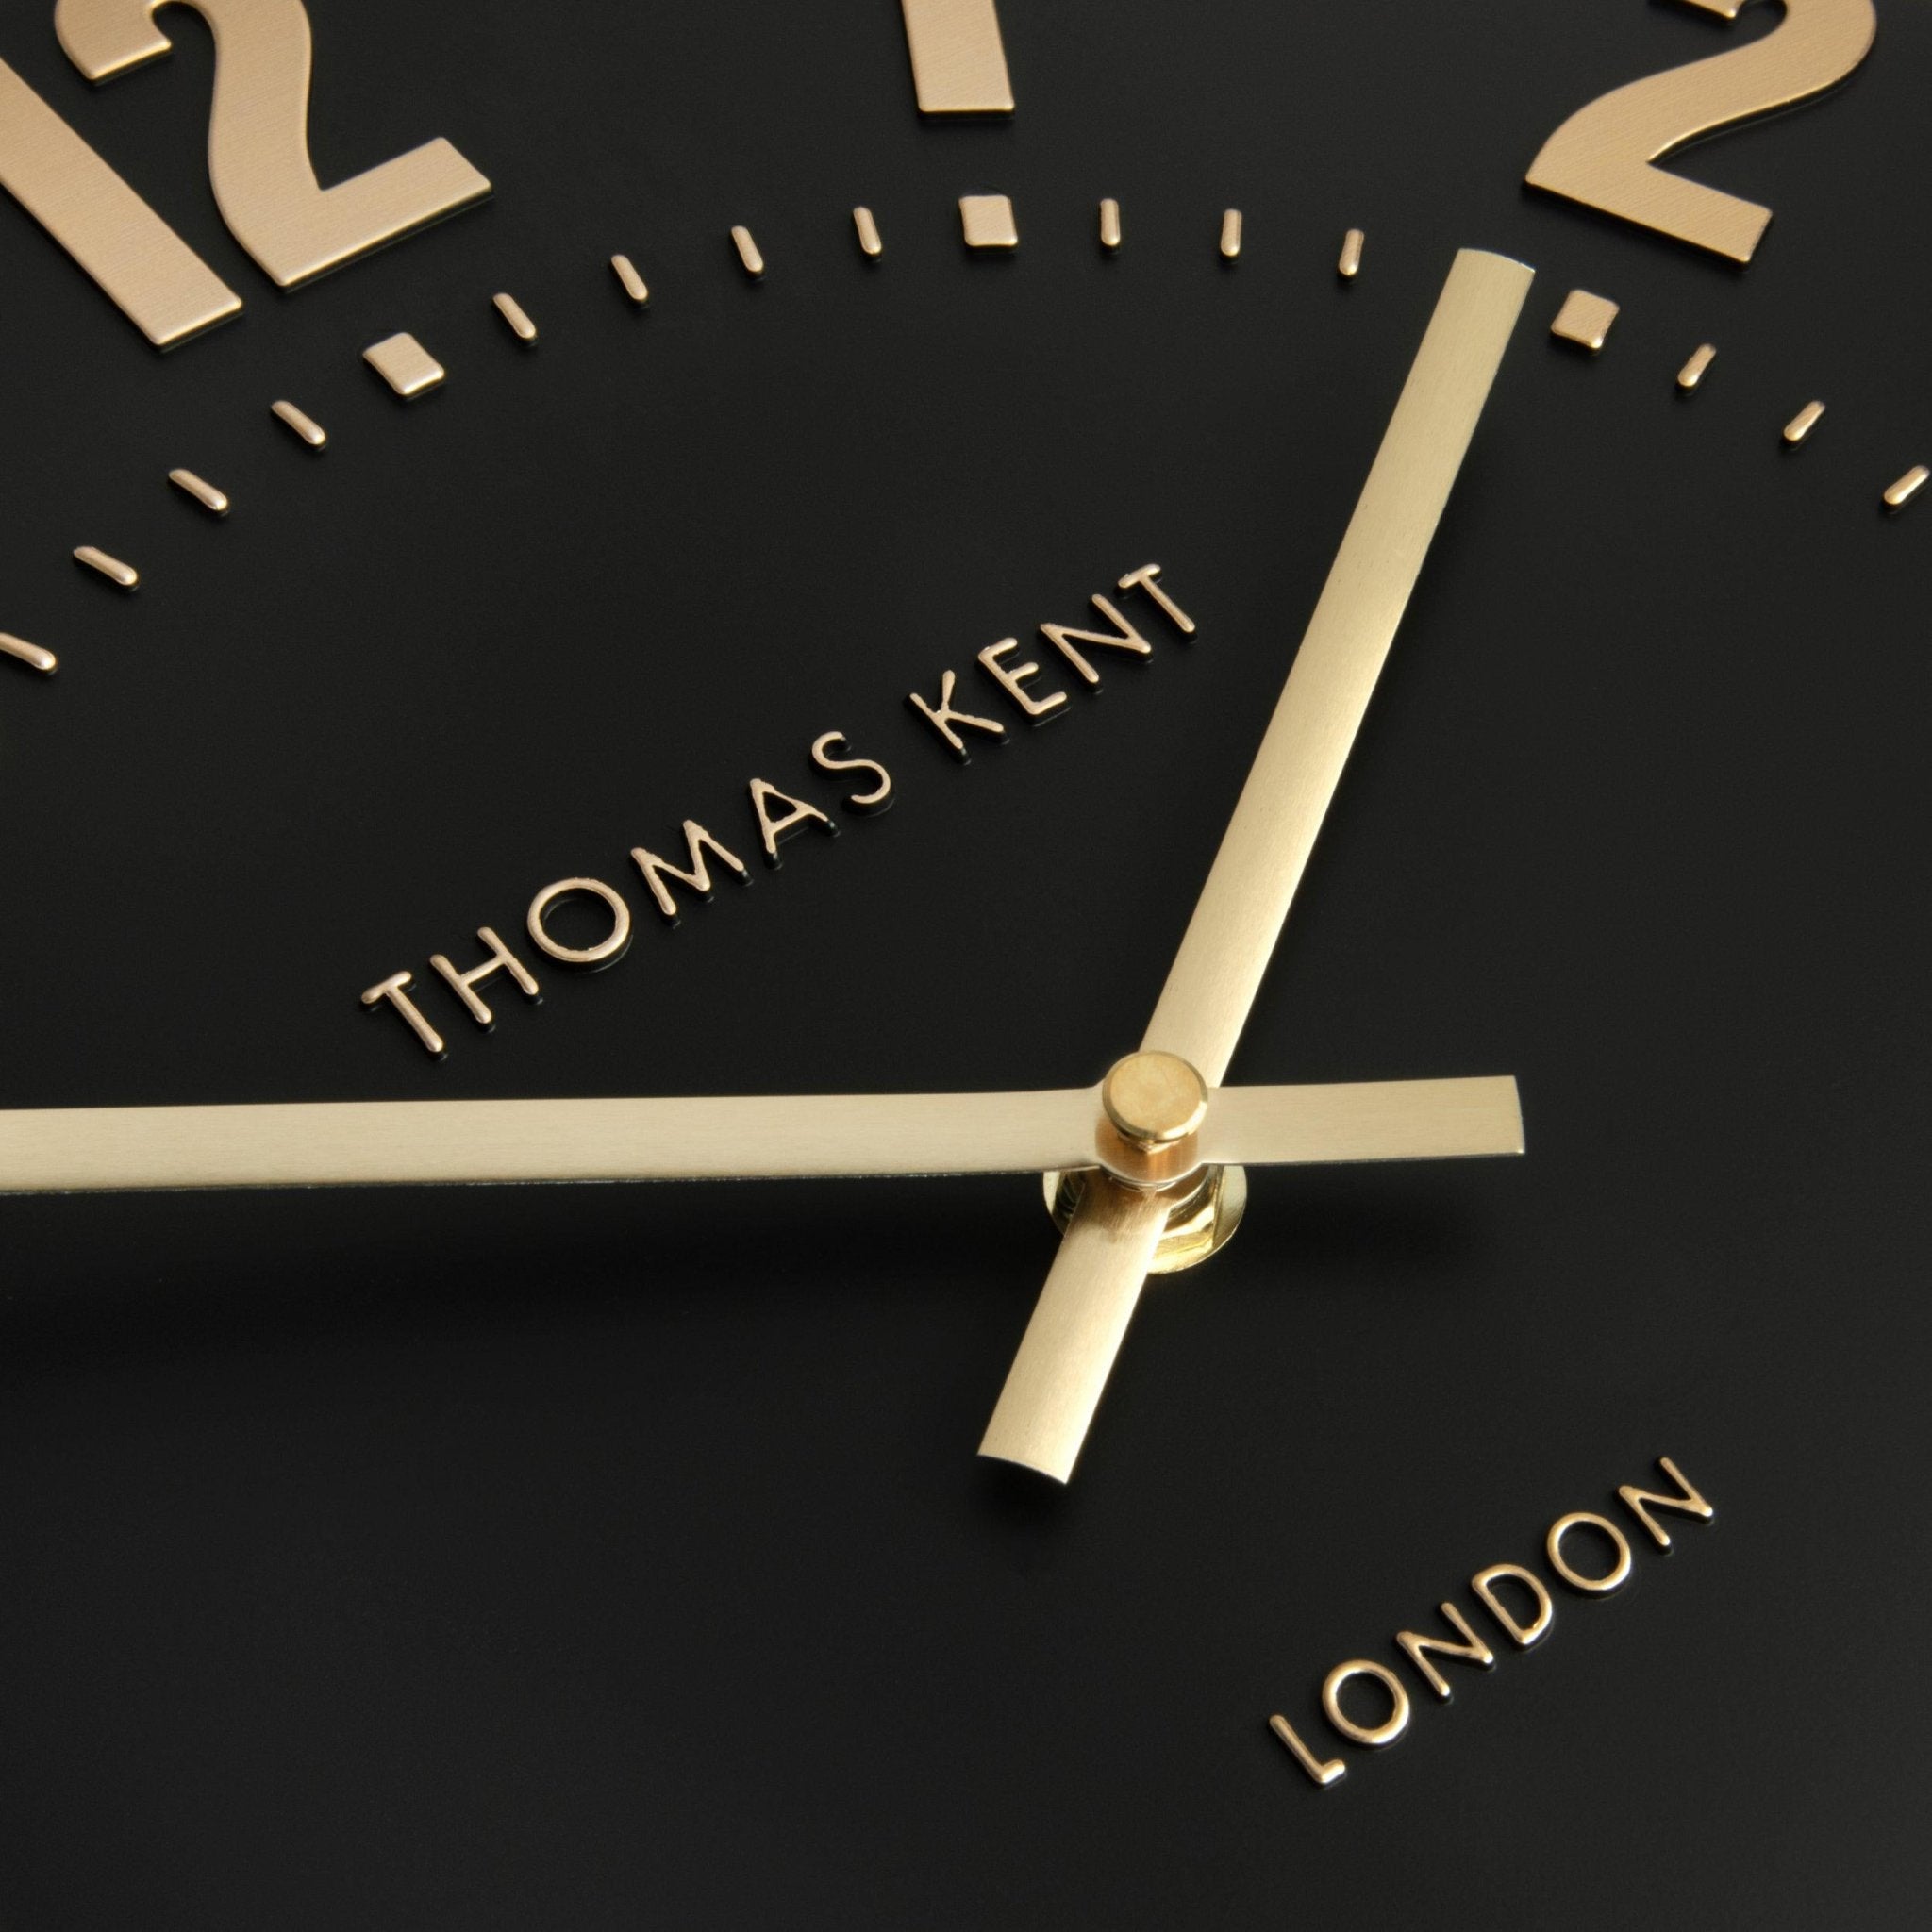 Thomas Kent Mulberry Wall Clock - Noir (30cm/12") - Duck Barn Interiors